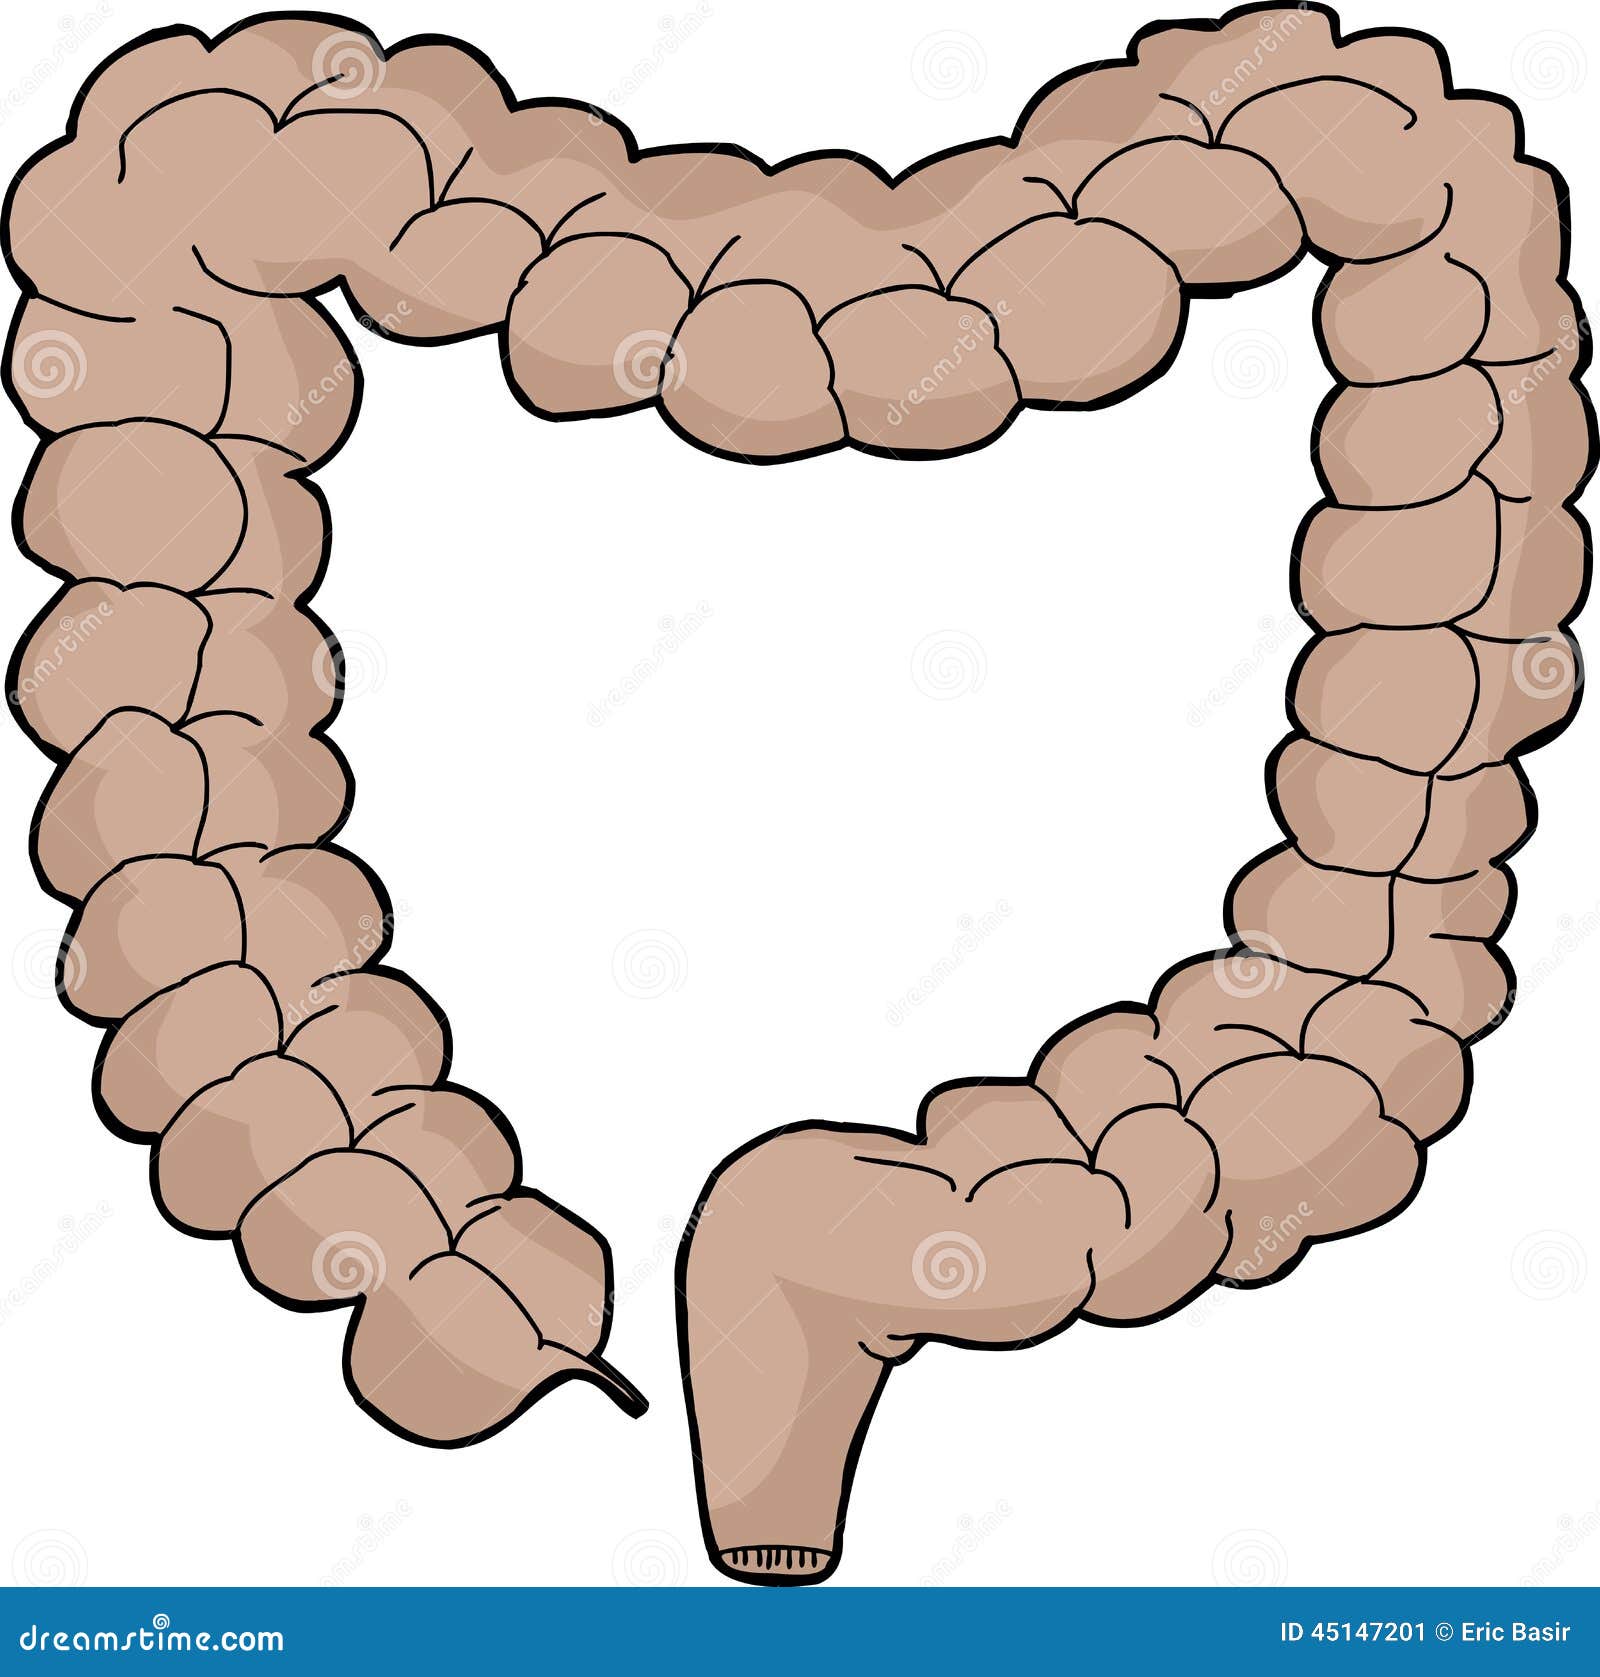 Large Intestine Cartoon Image